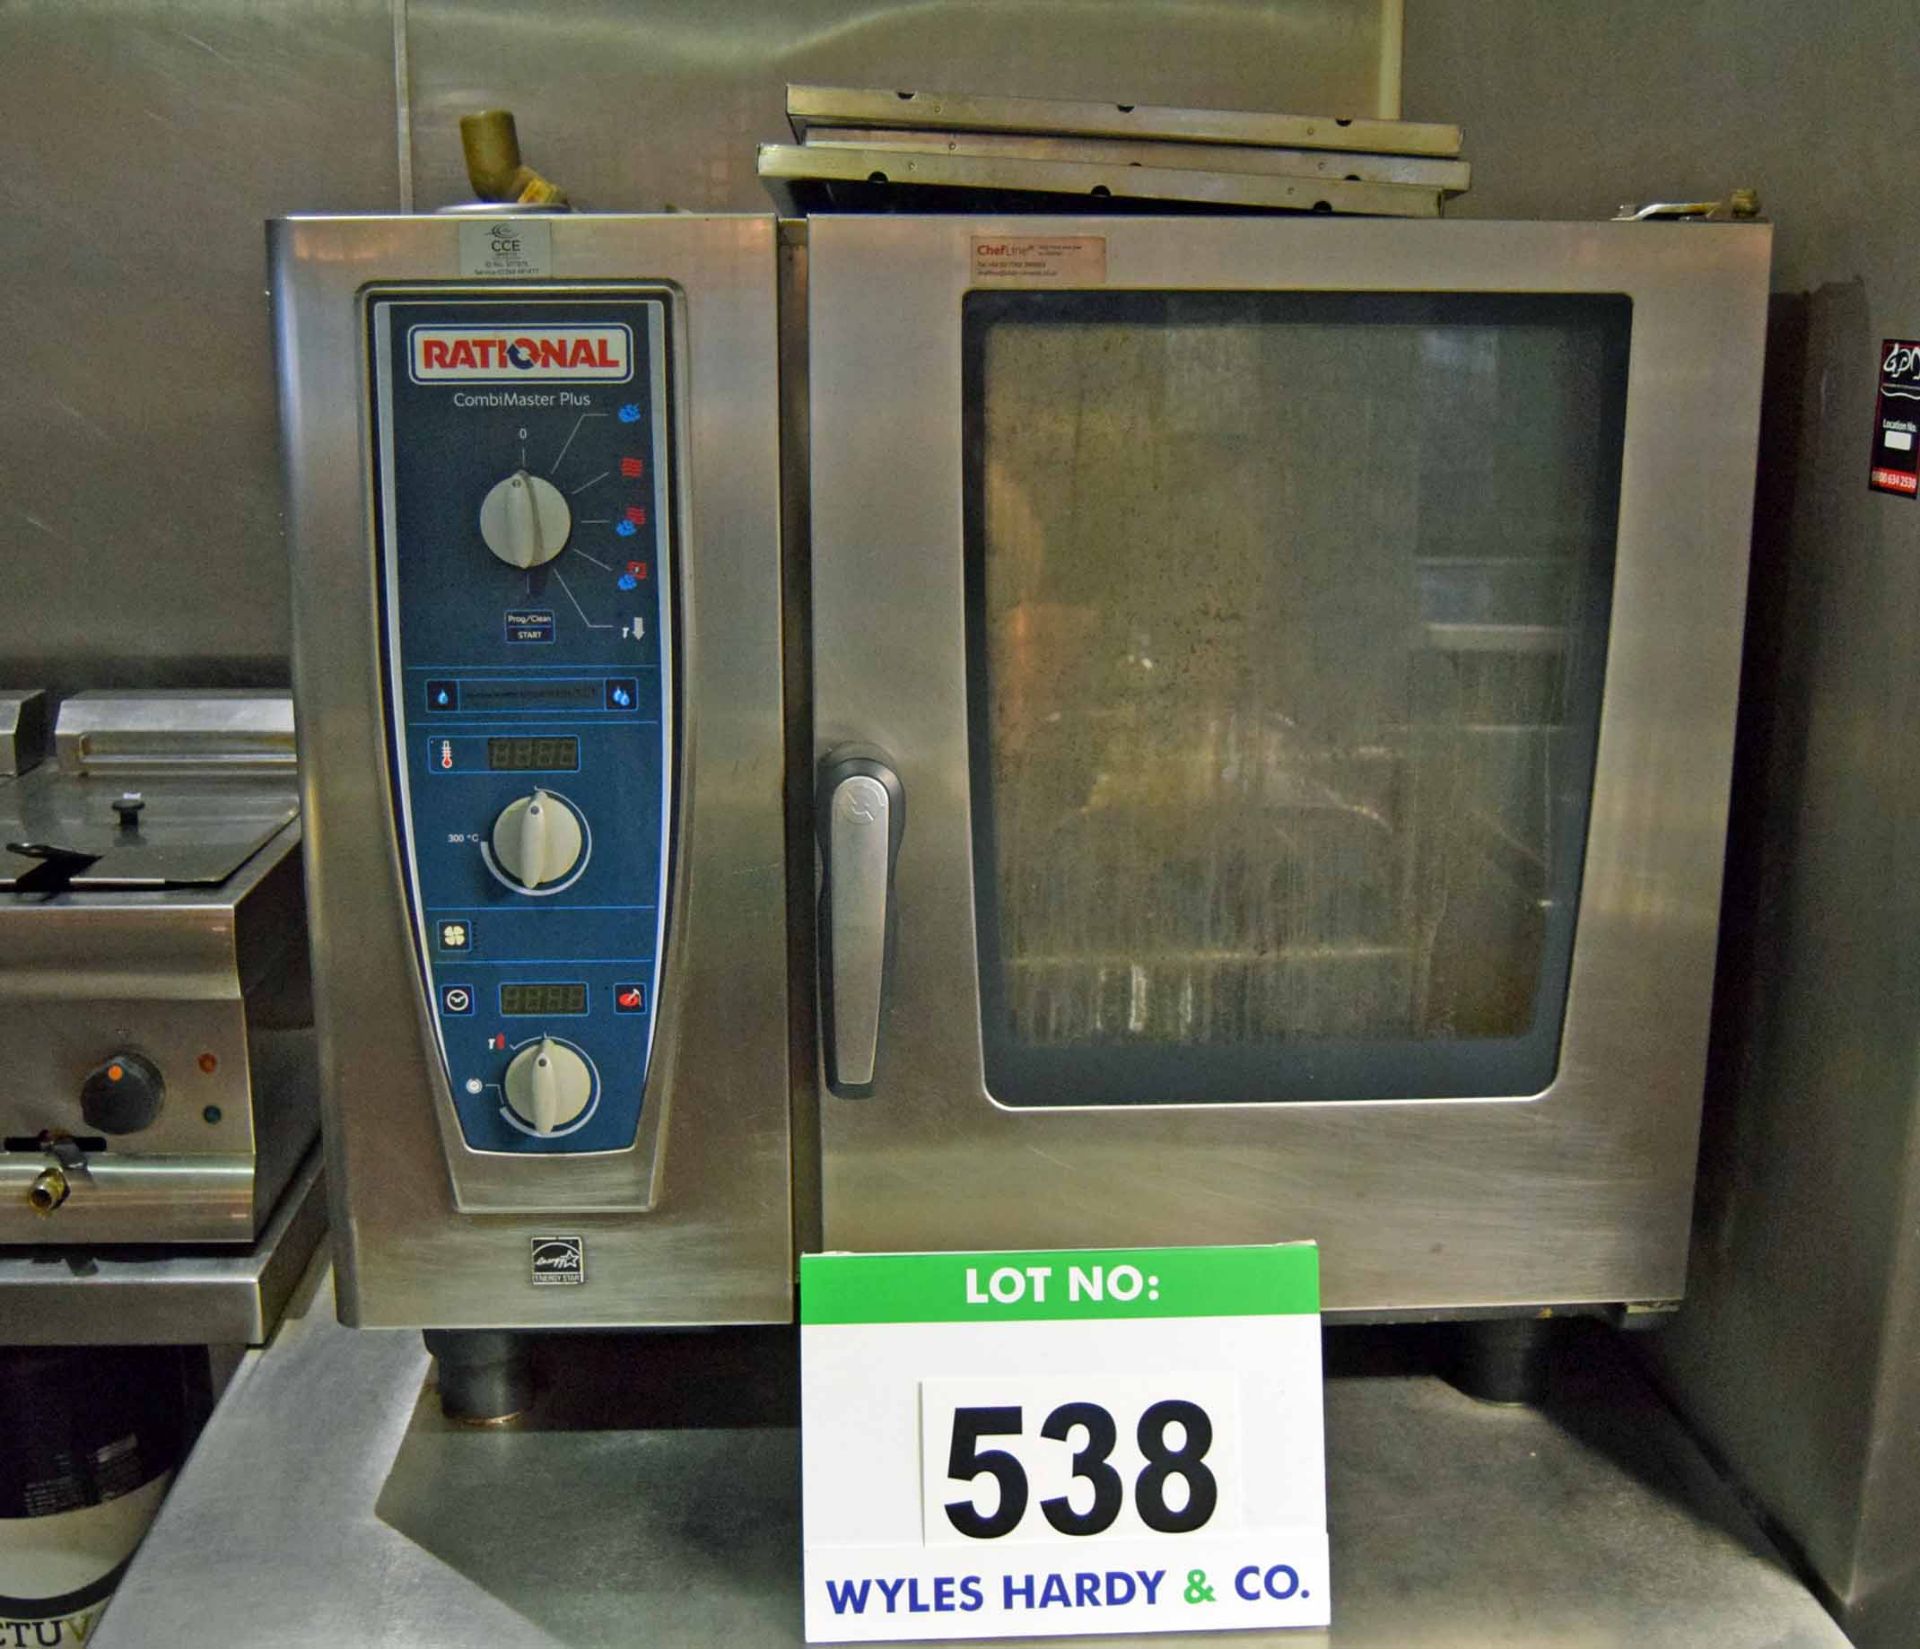 A RATIONAL Combi Master Plus Combination Steam Oven with a CTU VAPOUR Water Treatment Unit